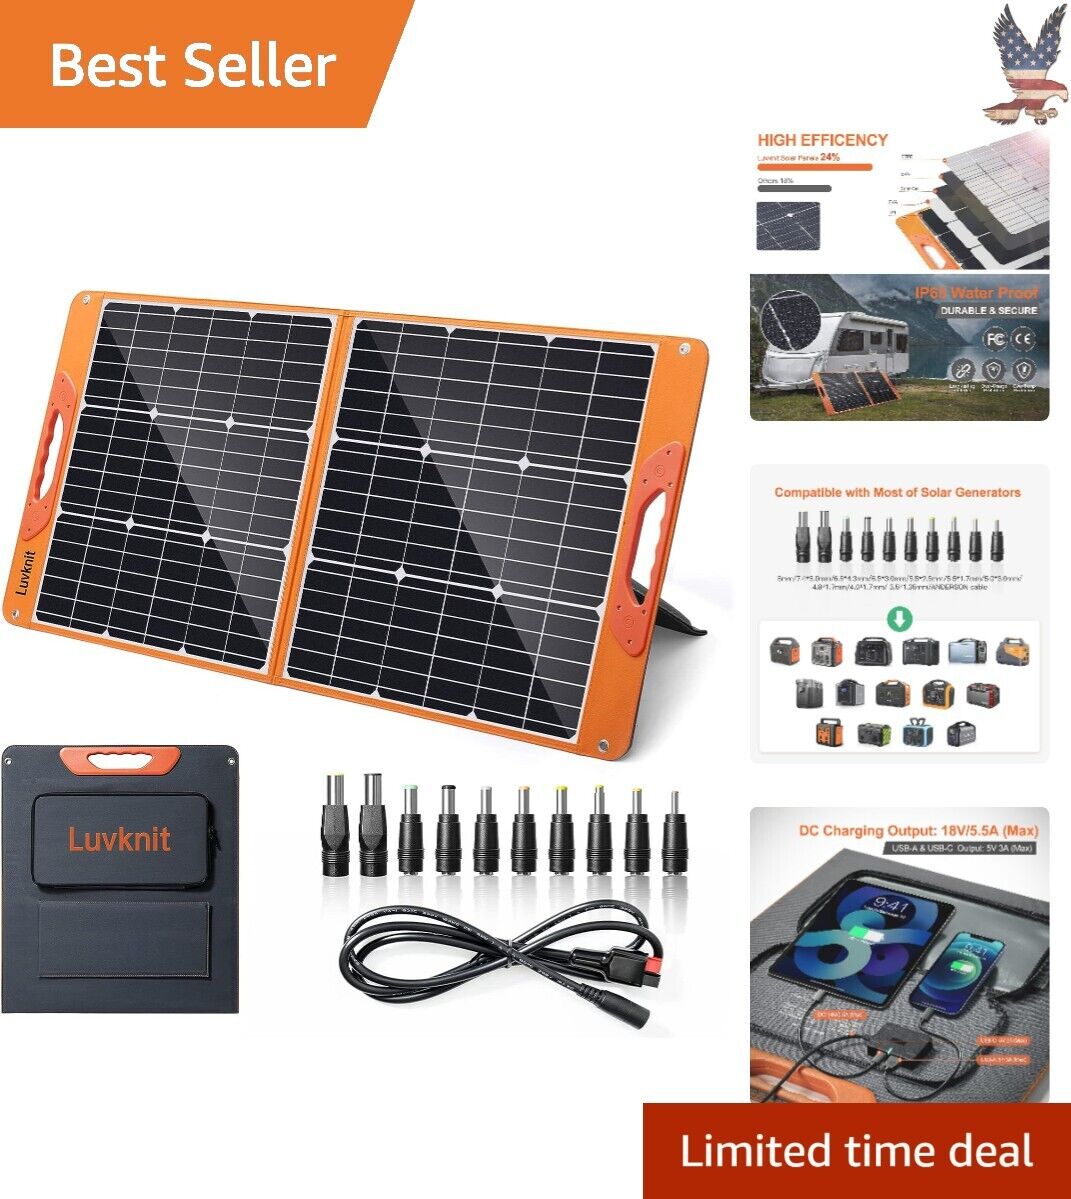 Portable 100W Camping Solar Panel - High Conversion Efficiency - Waterproof